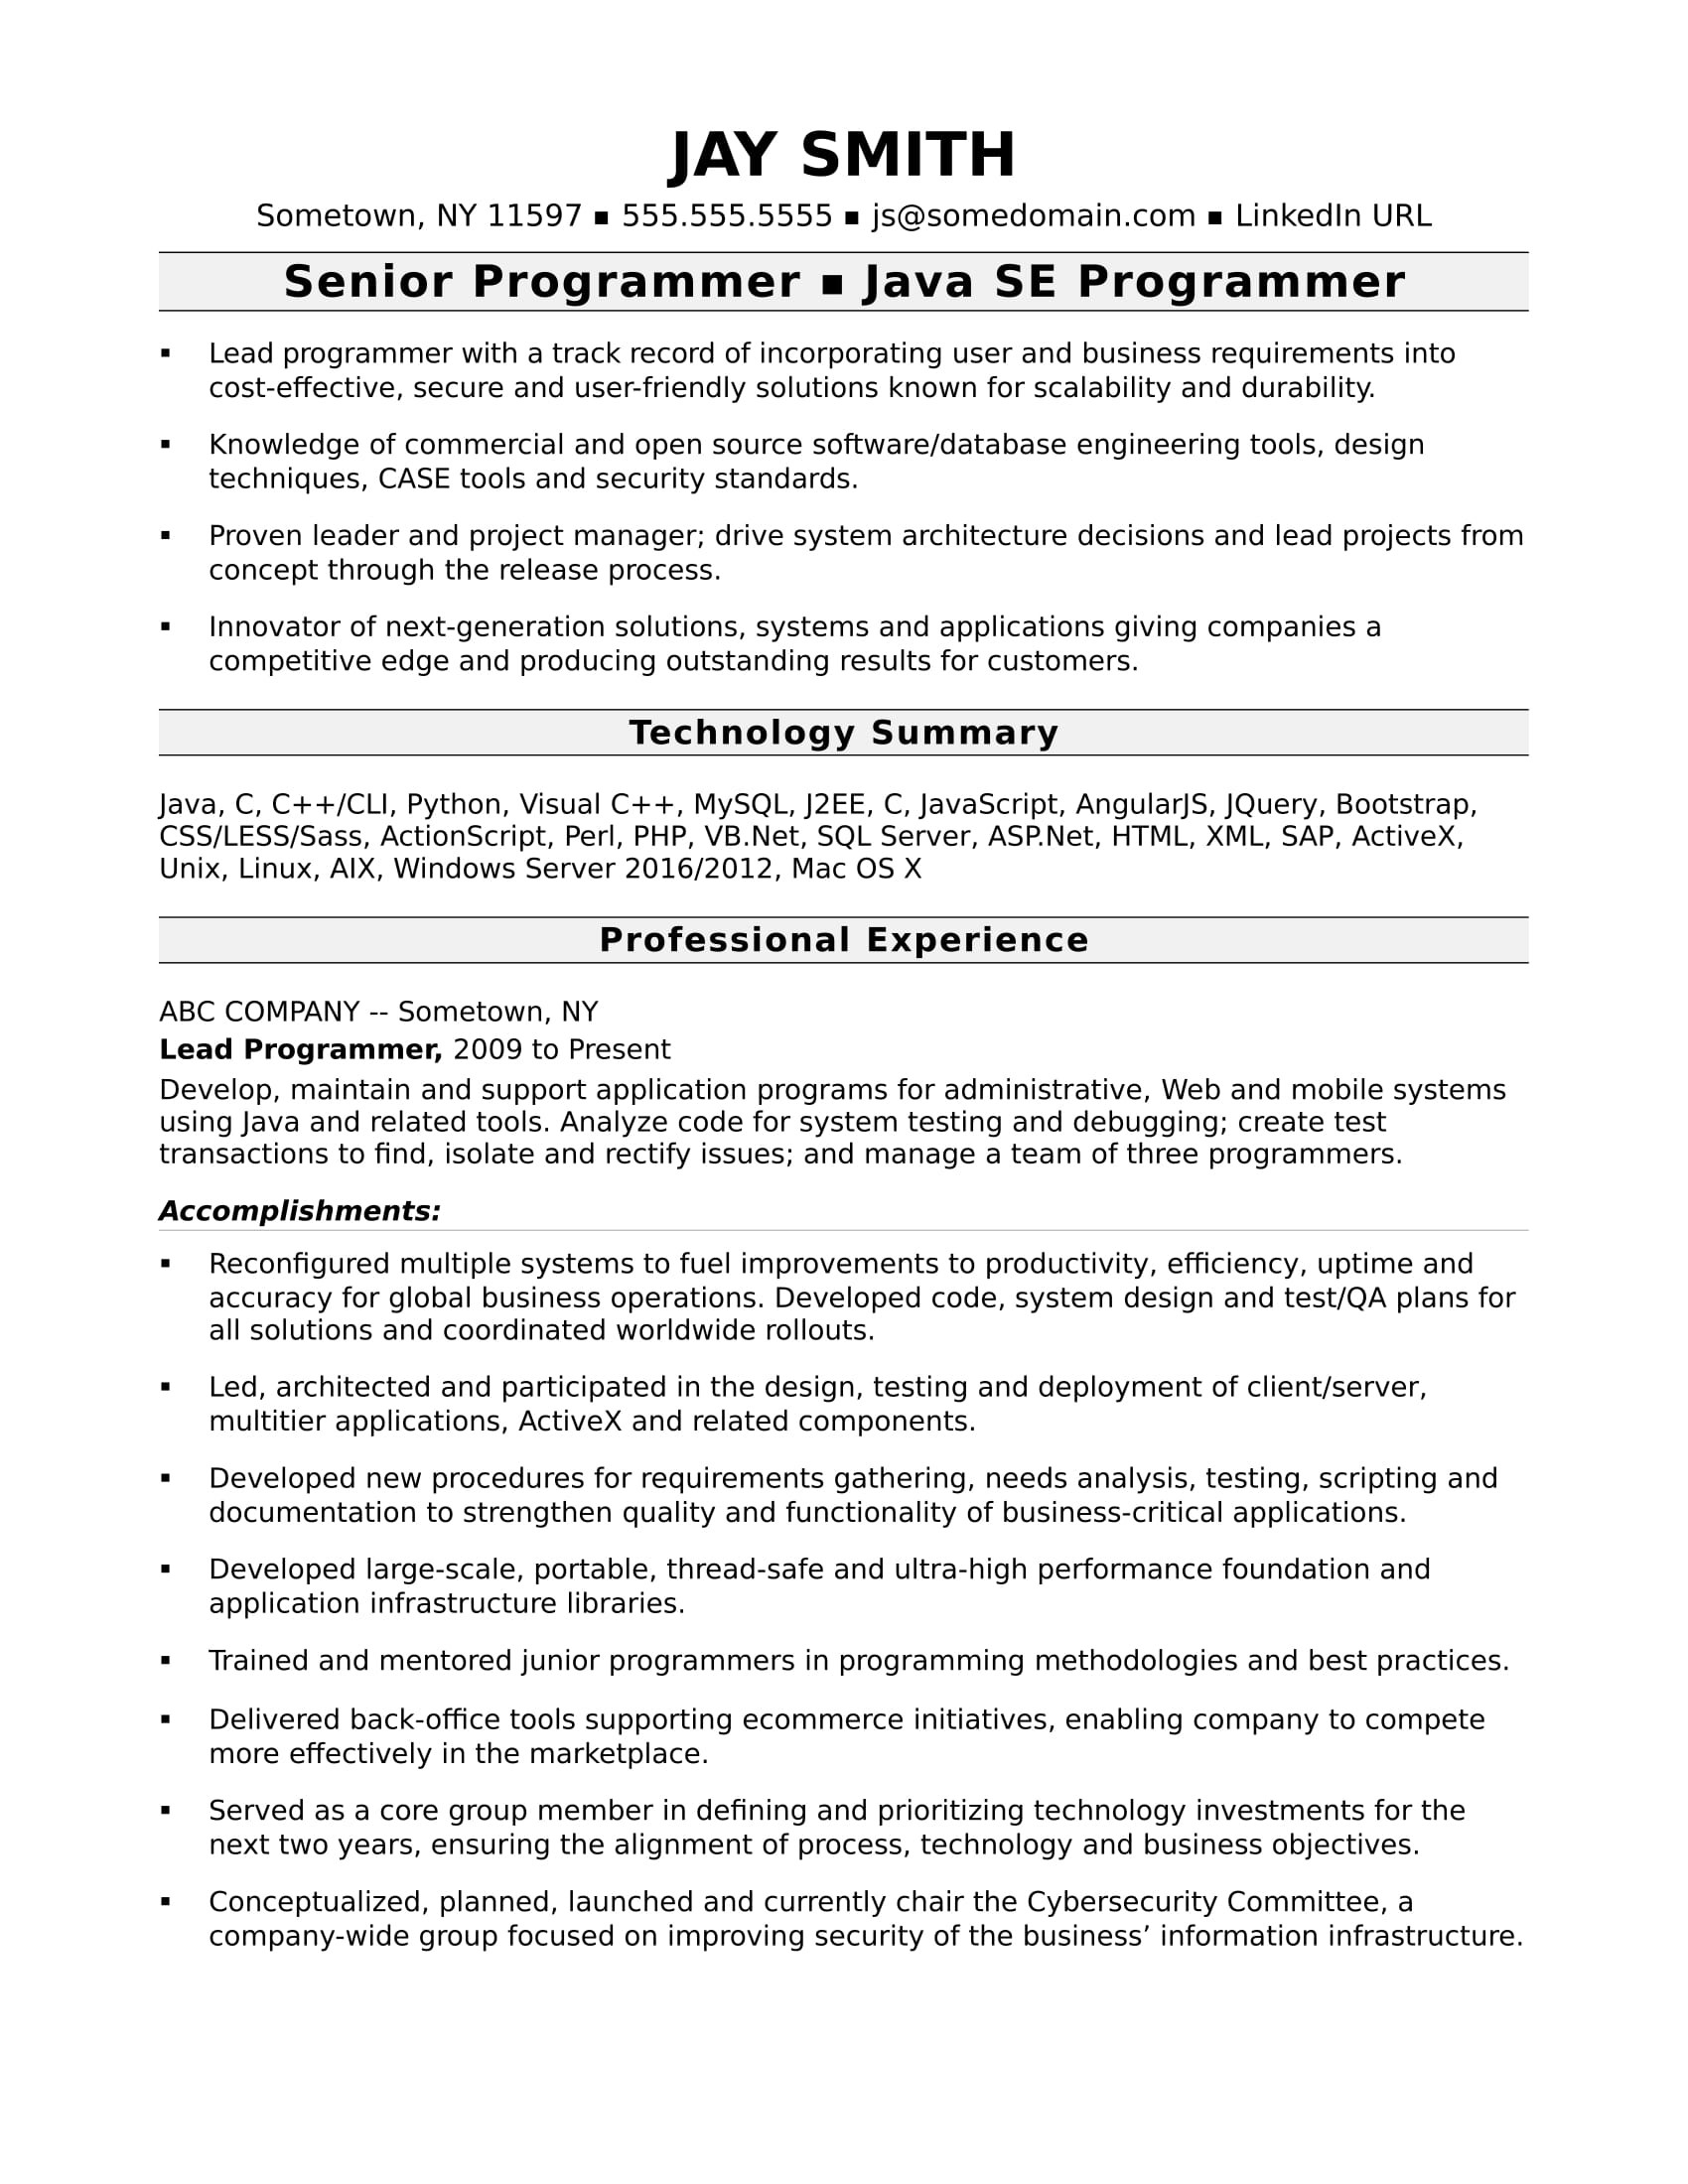 Oracle Certified Java Programmer Sample Resume Programmer Resume Template Monster.com